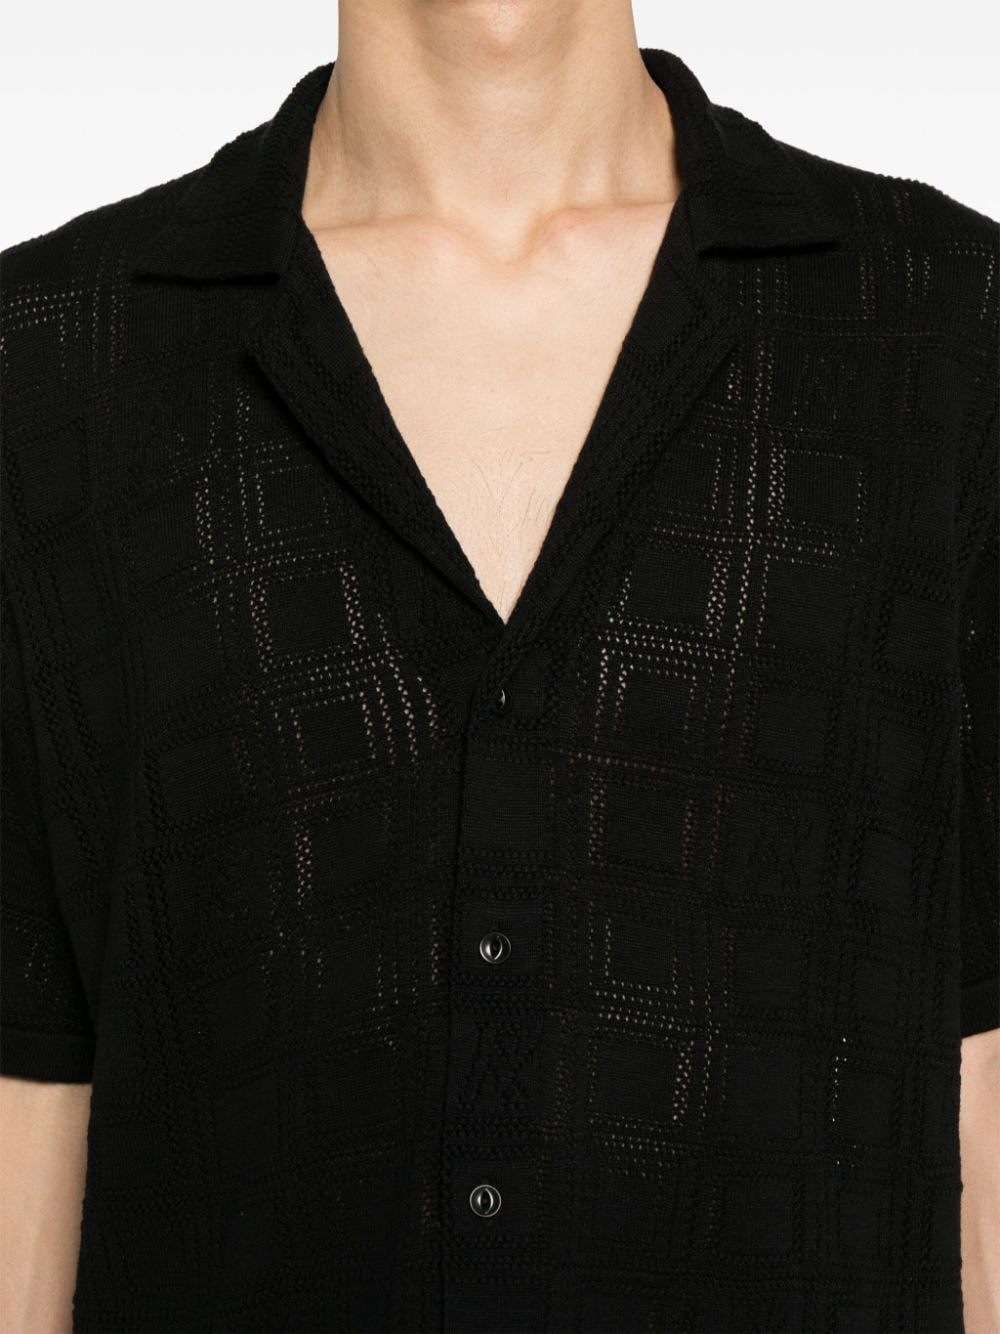 Black knitted shirt